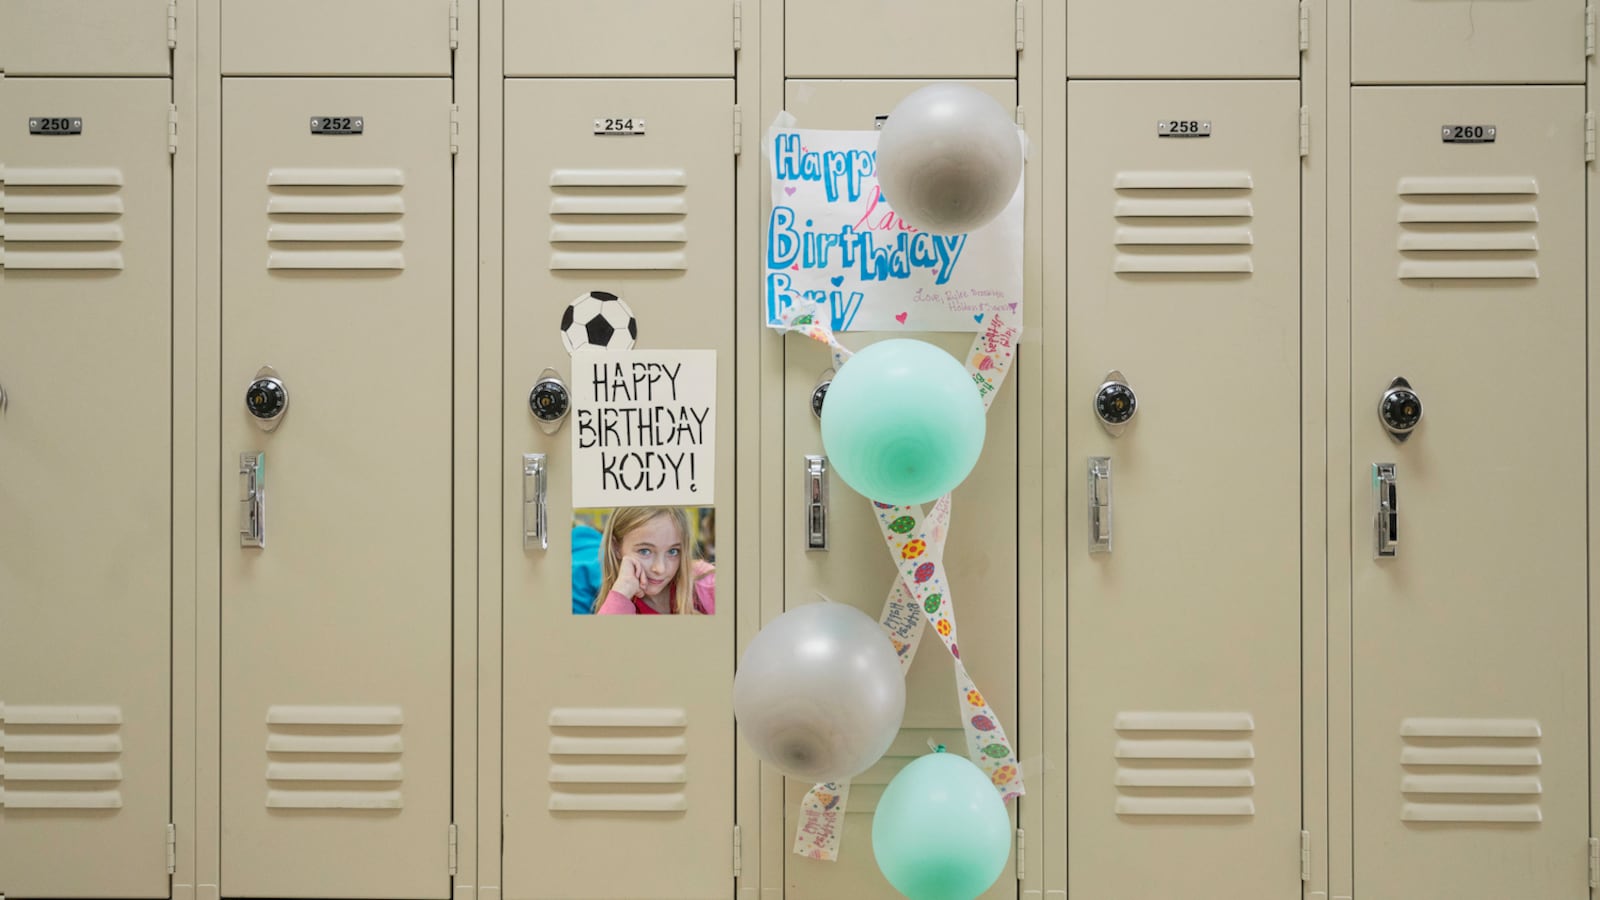 Happy birthday sign and balloons on school locker